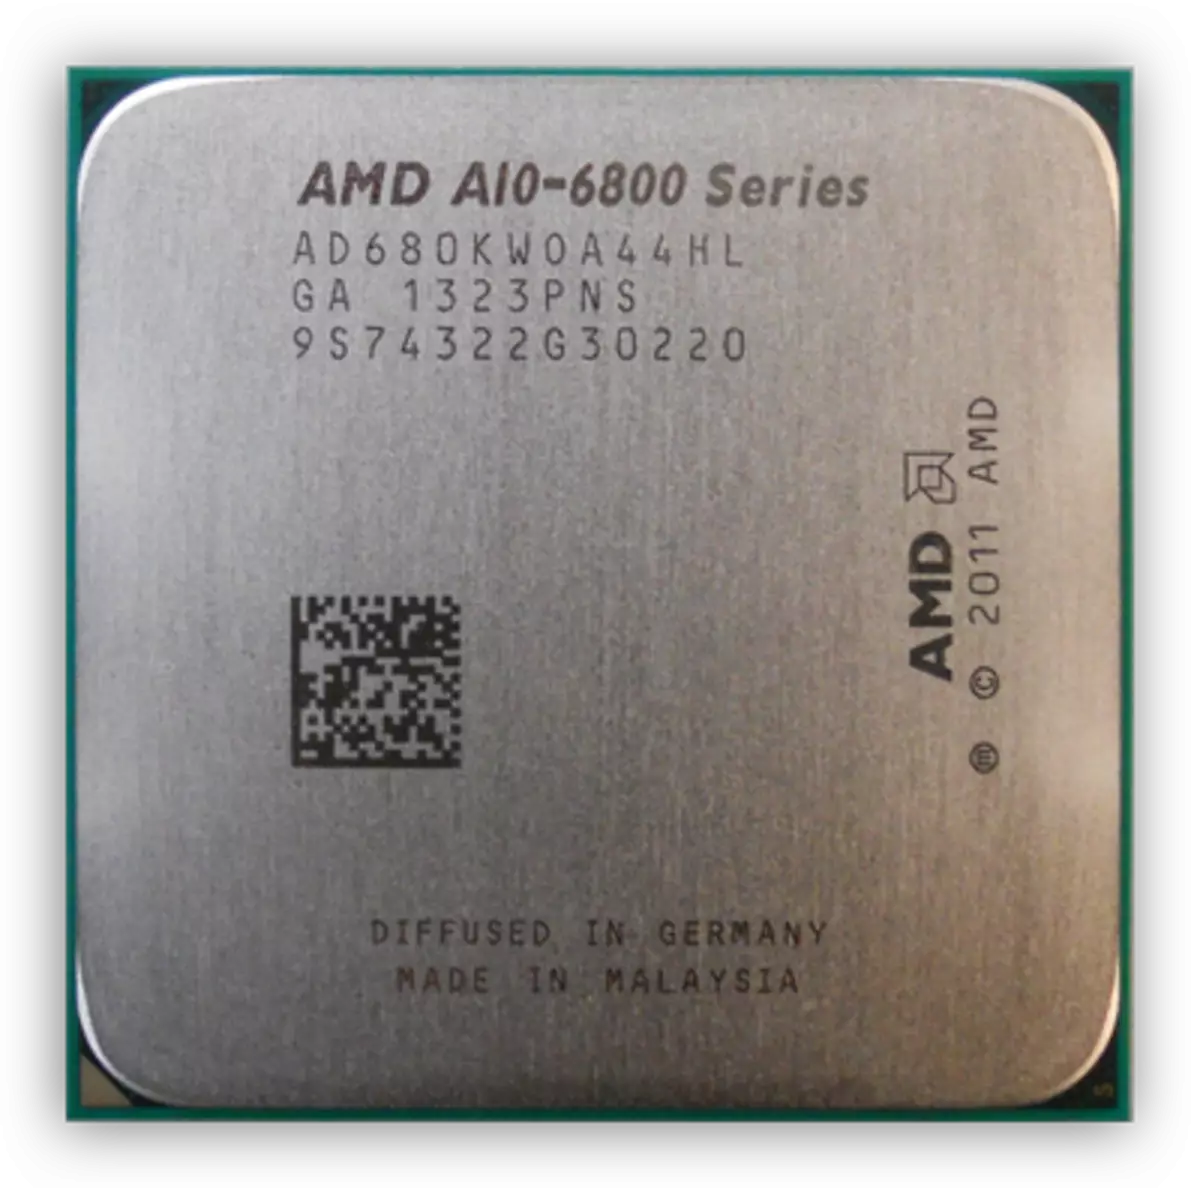 Prosesor AMD A10 6800K ing arsitektur Richland